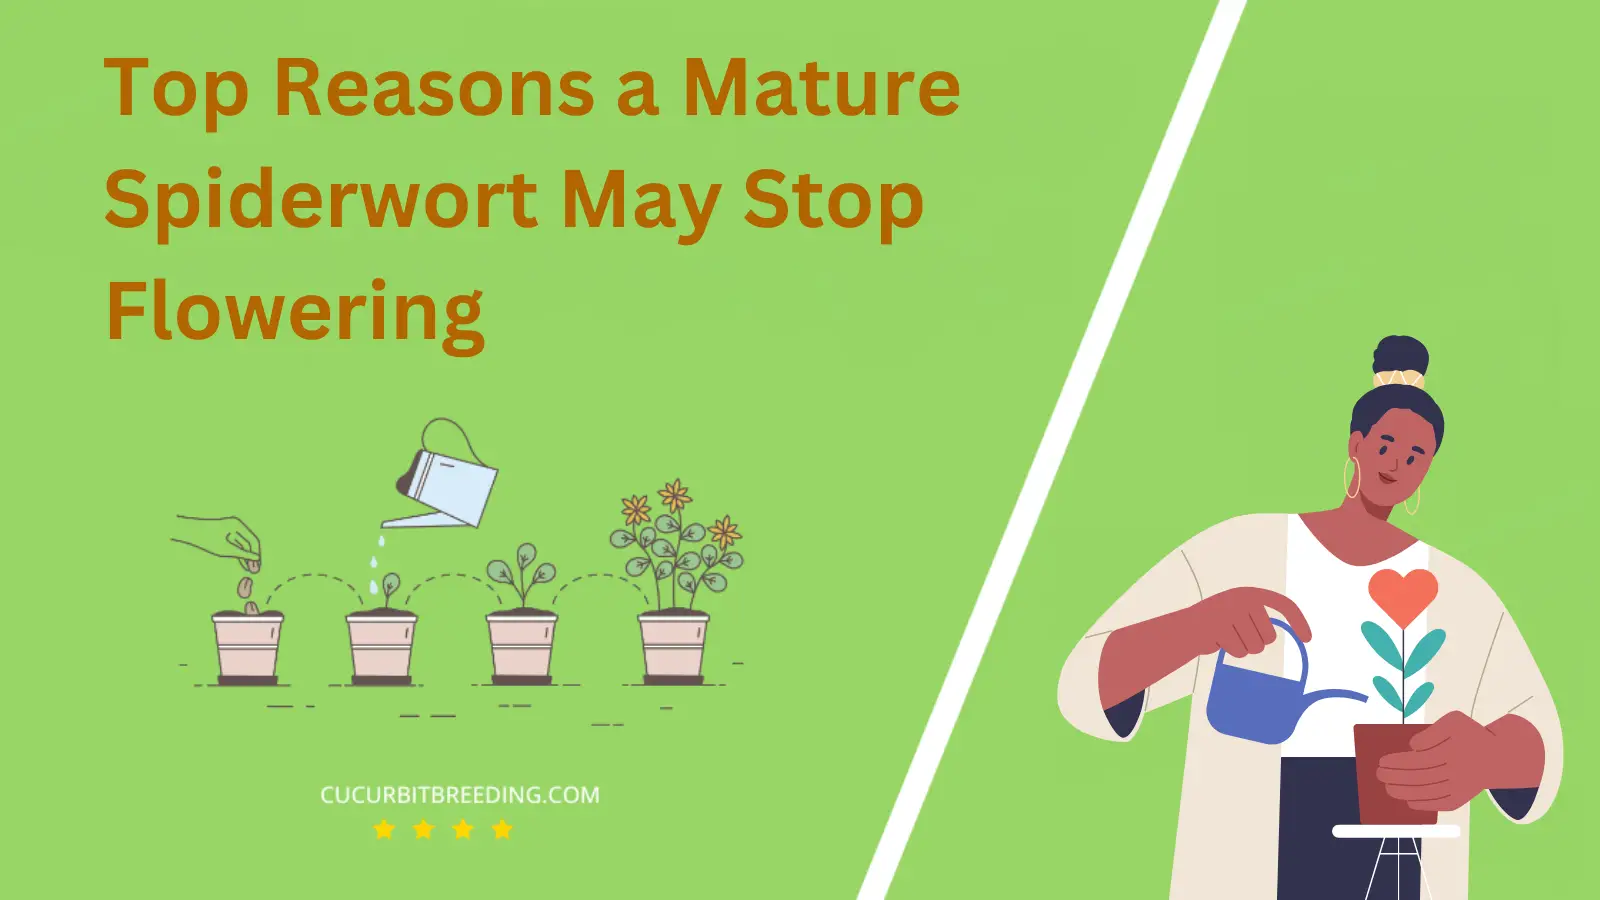 Top Reasons a Mature Spiderwort May Stop Flowering